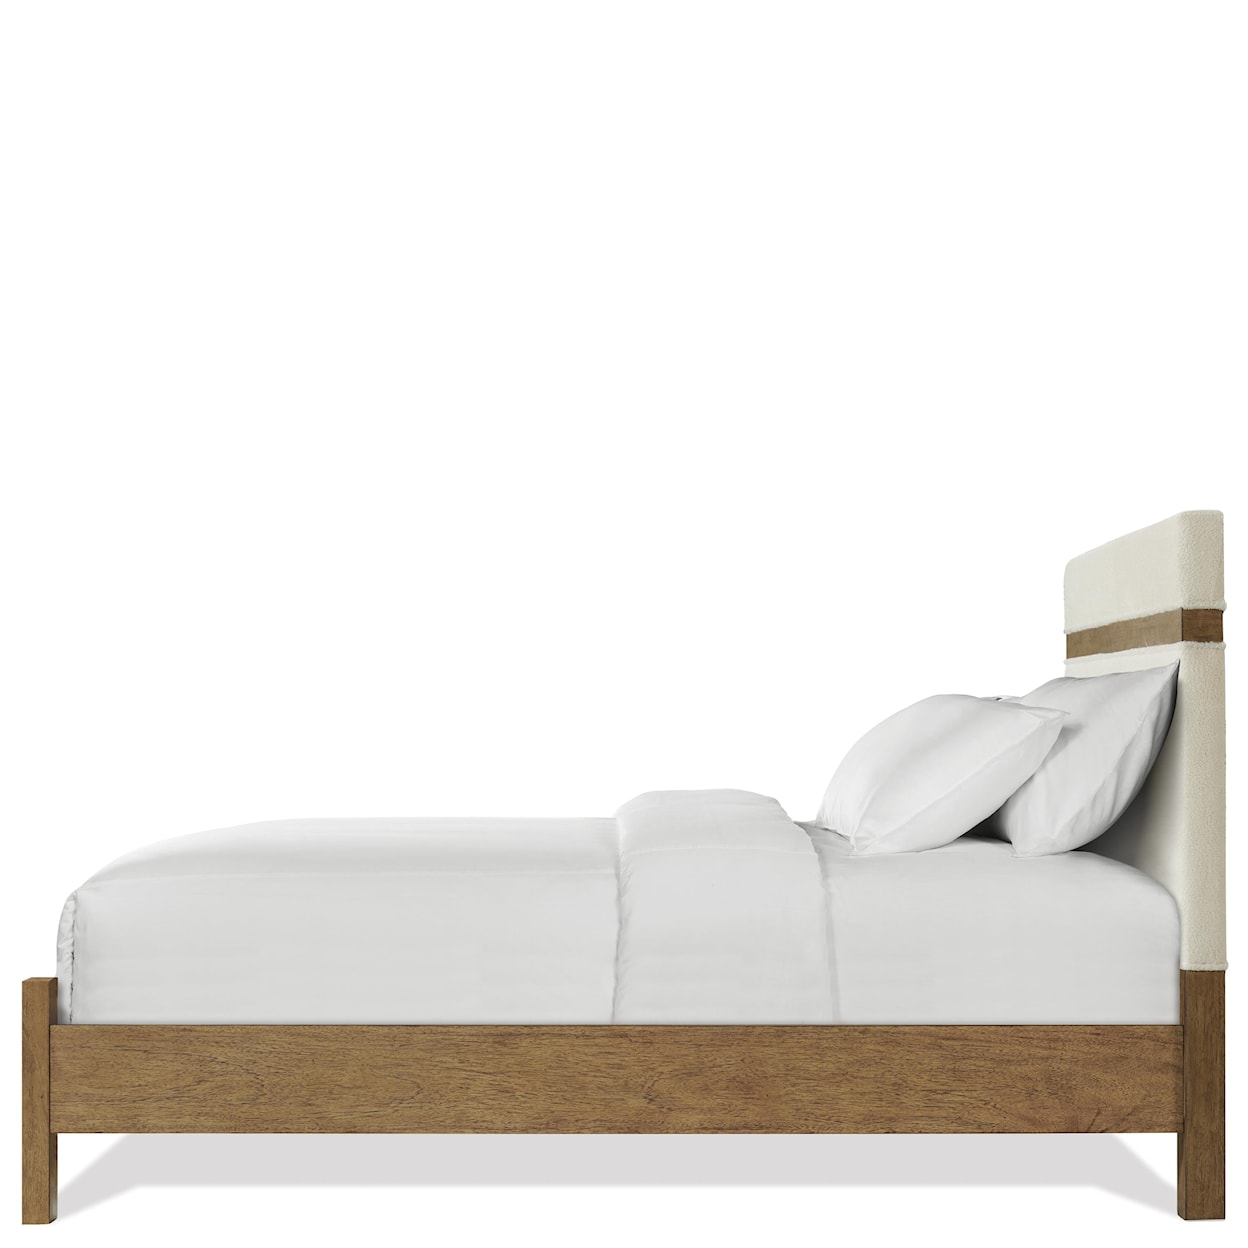 Riverside Furniture Bozeman Queen Upholstered Panel Bed